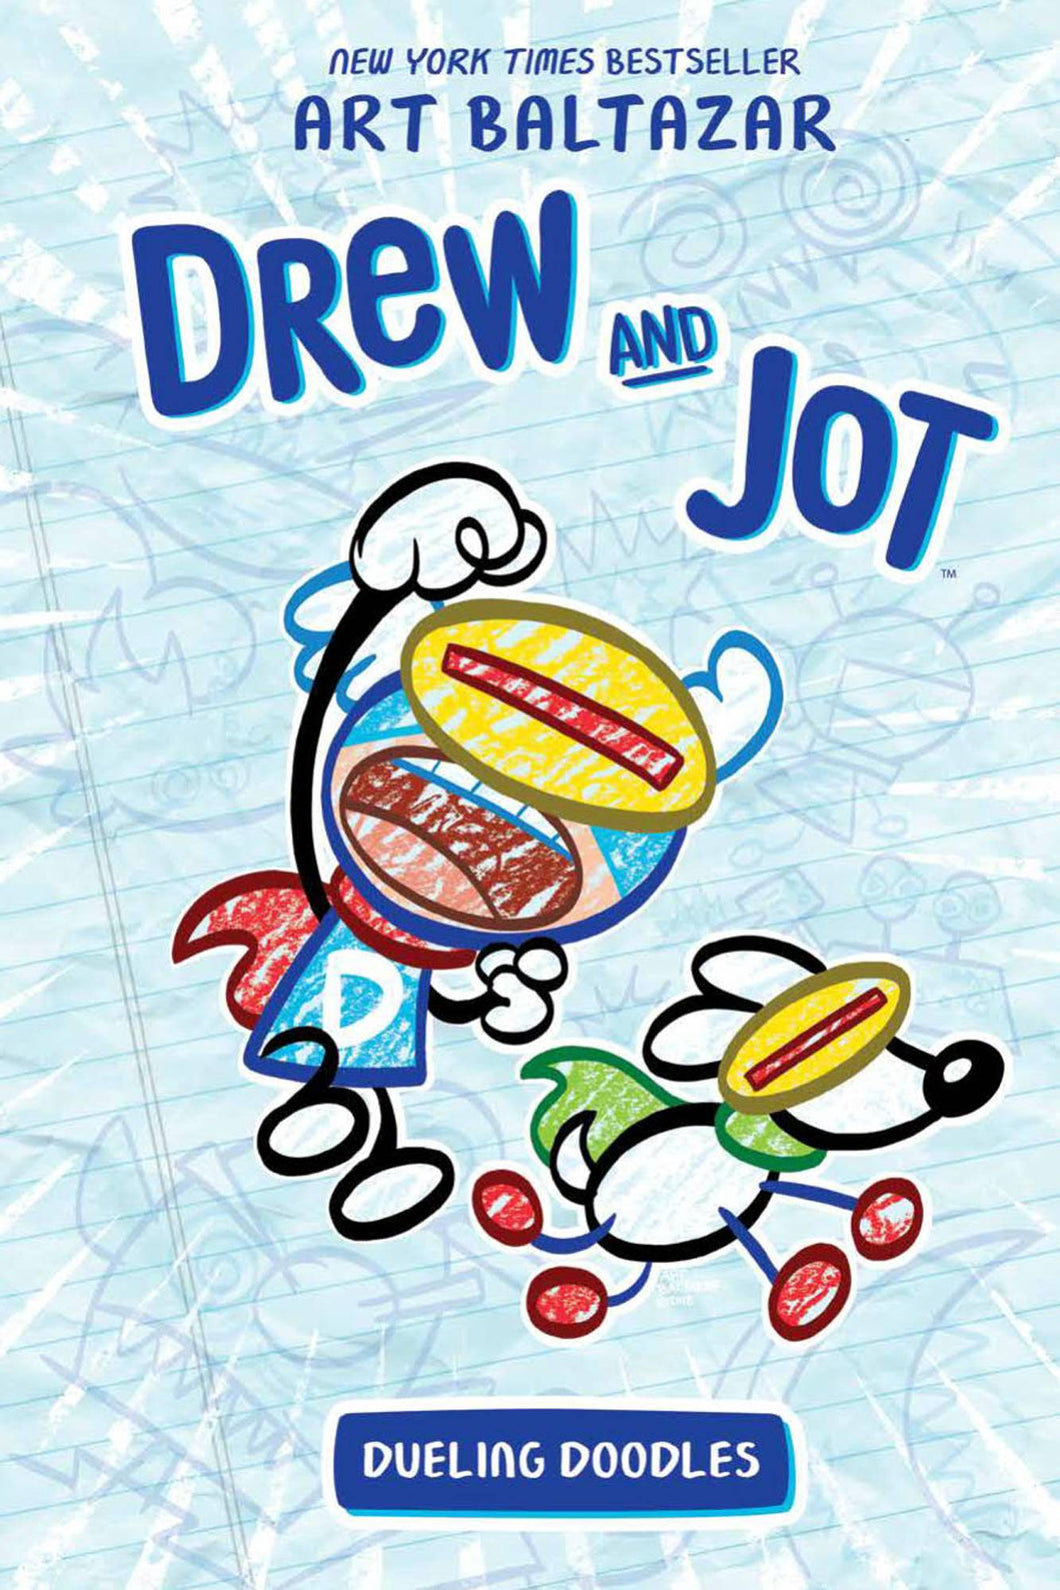 Drew & Jot Dueling Doodles Original Gn Hc